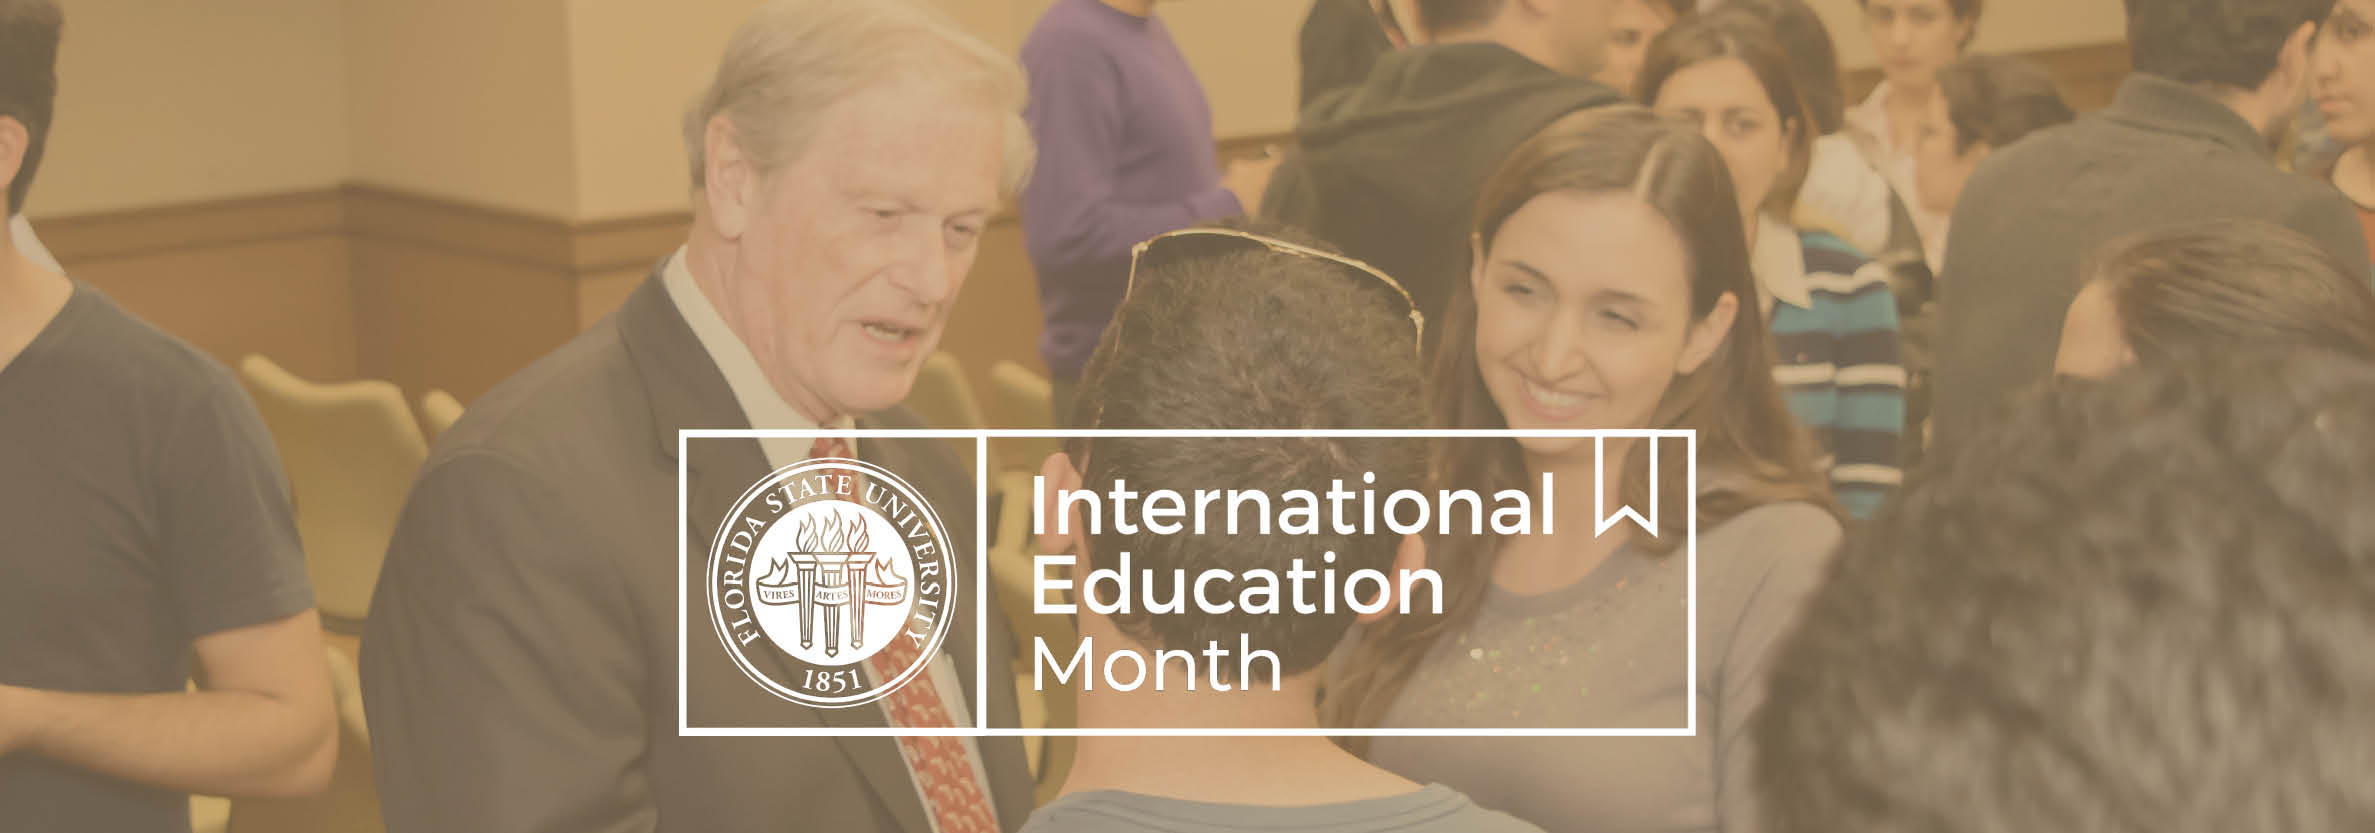 International Education Month – President Thrasher